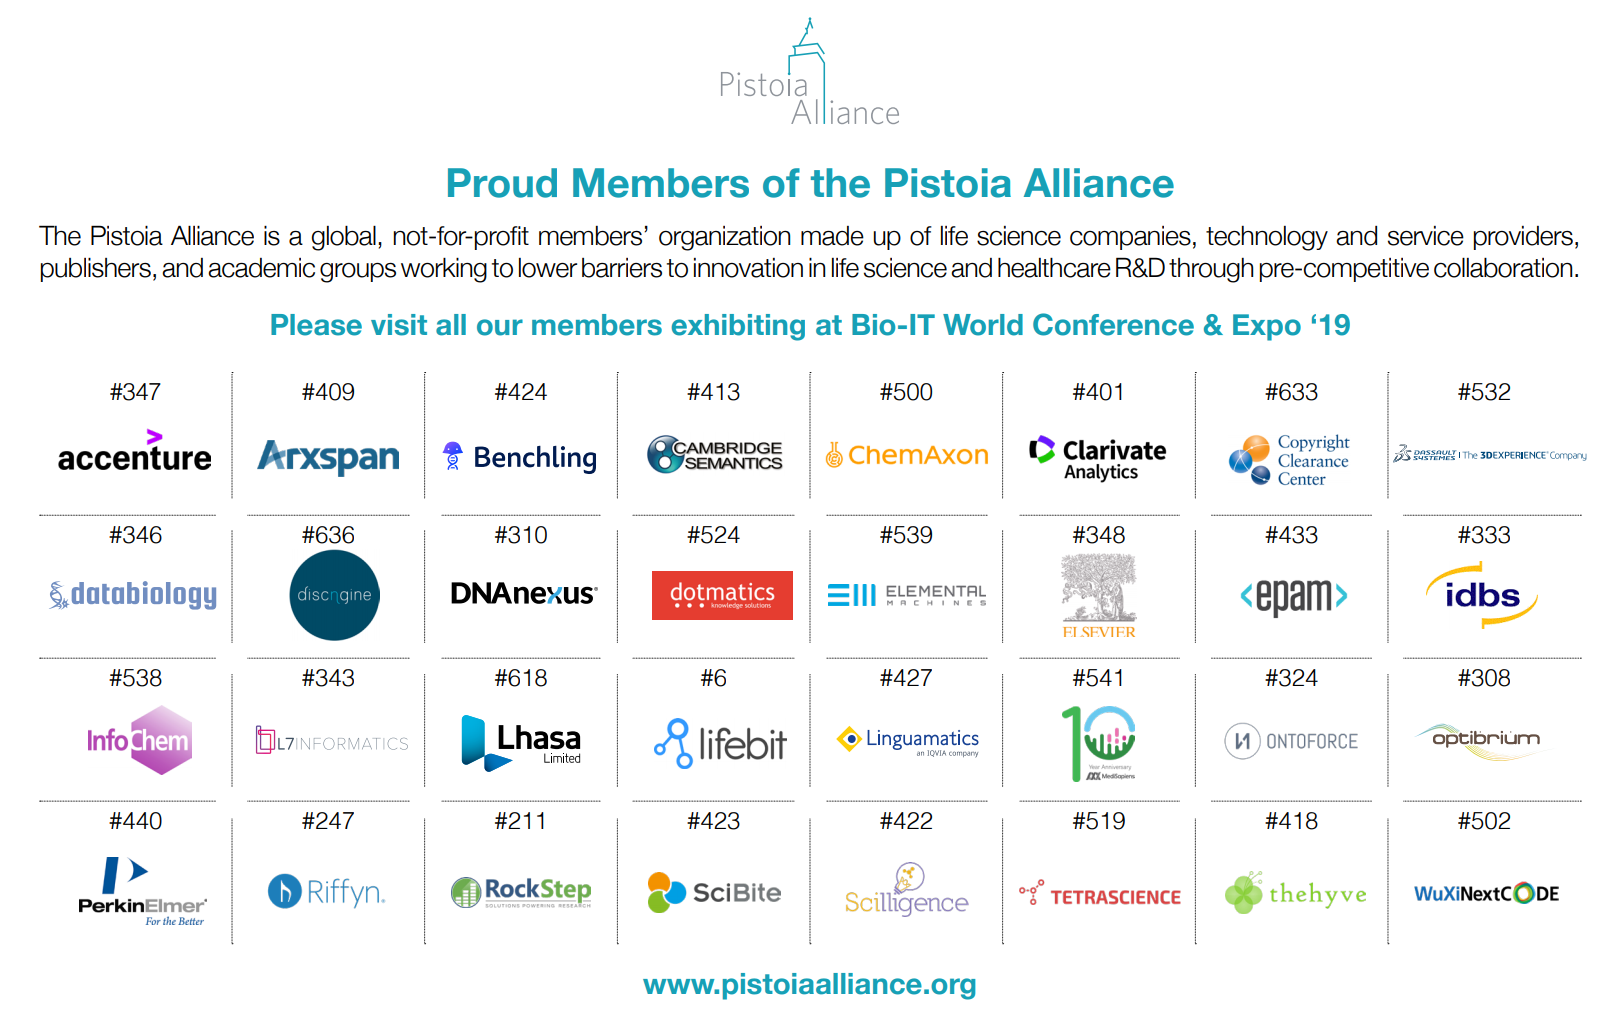 Meet the Pistoia Alliance membership attending BioIT